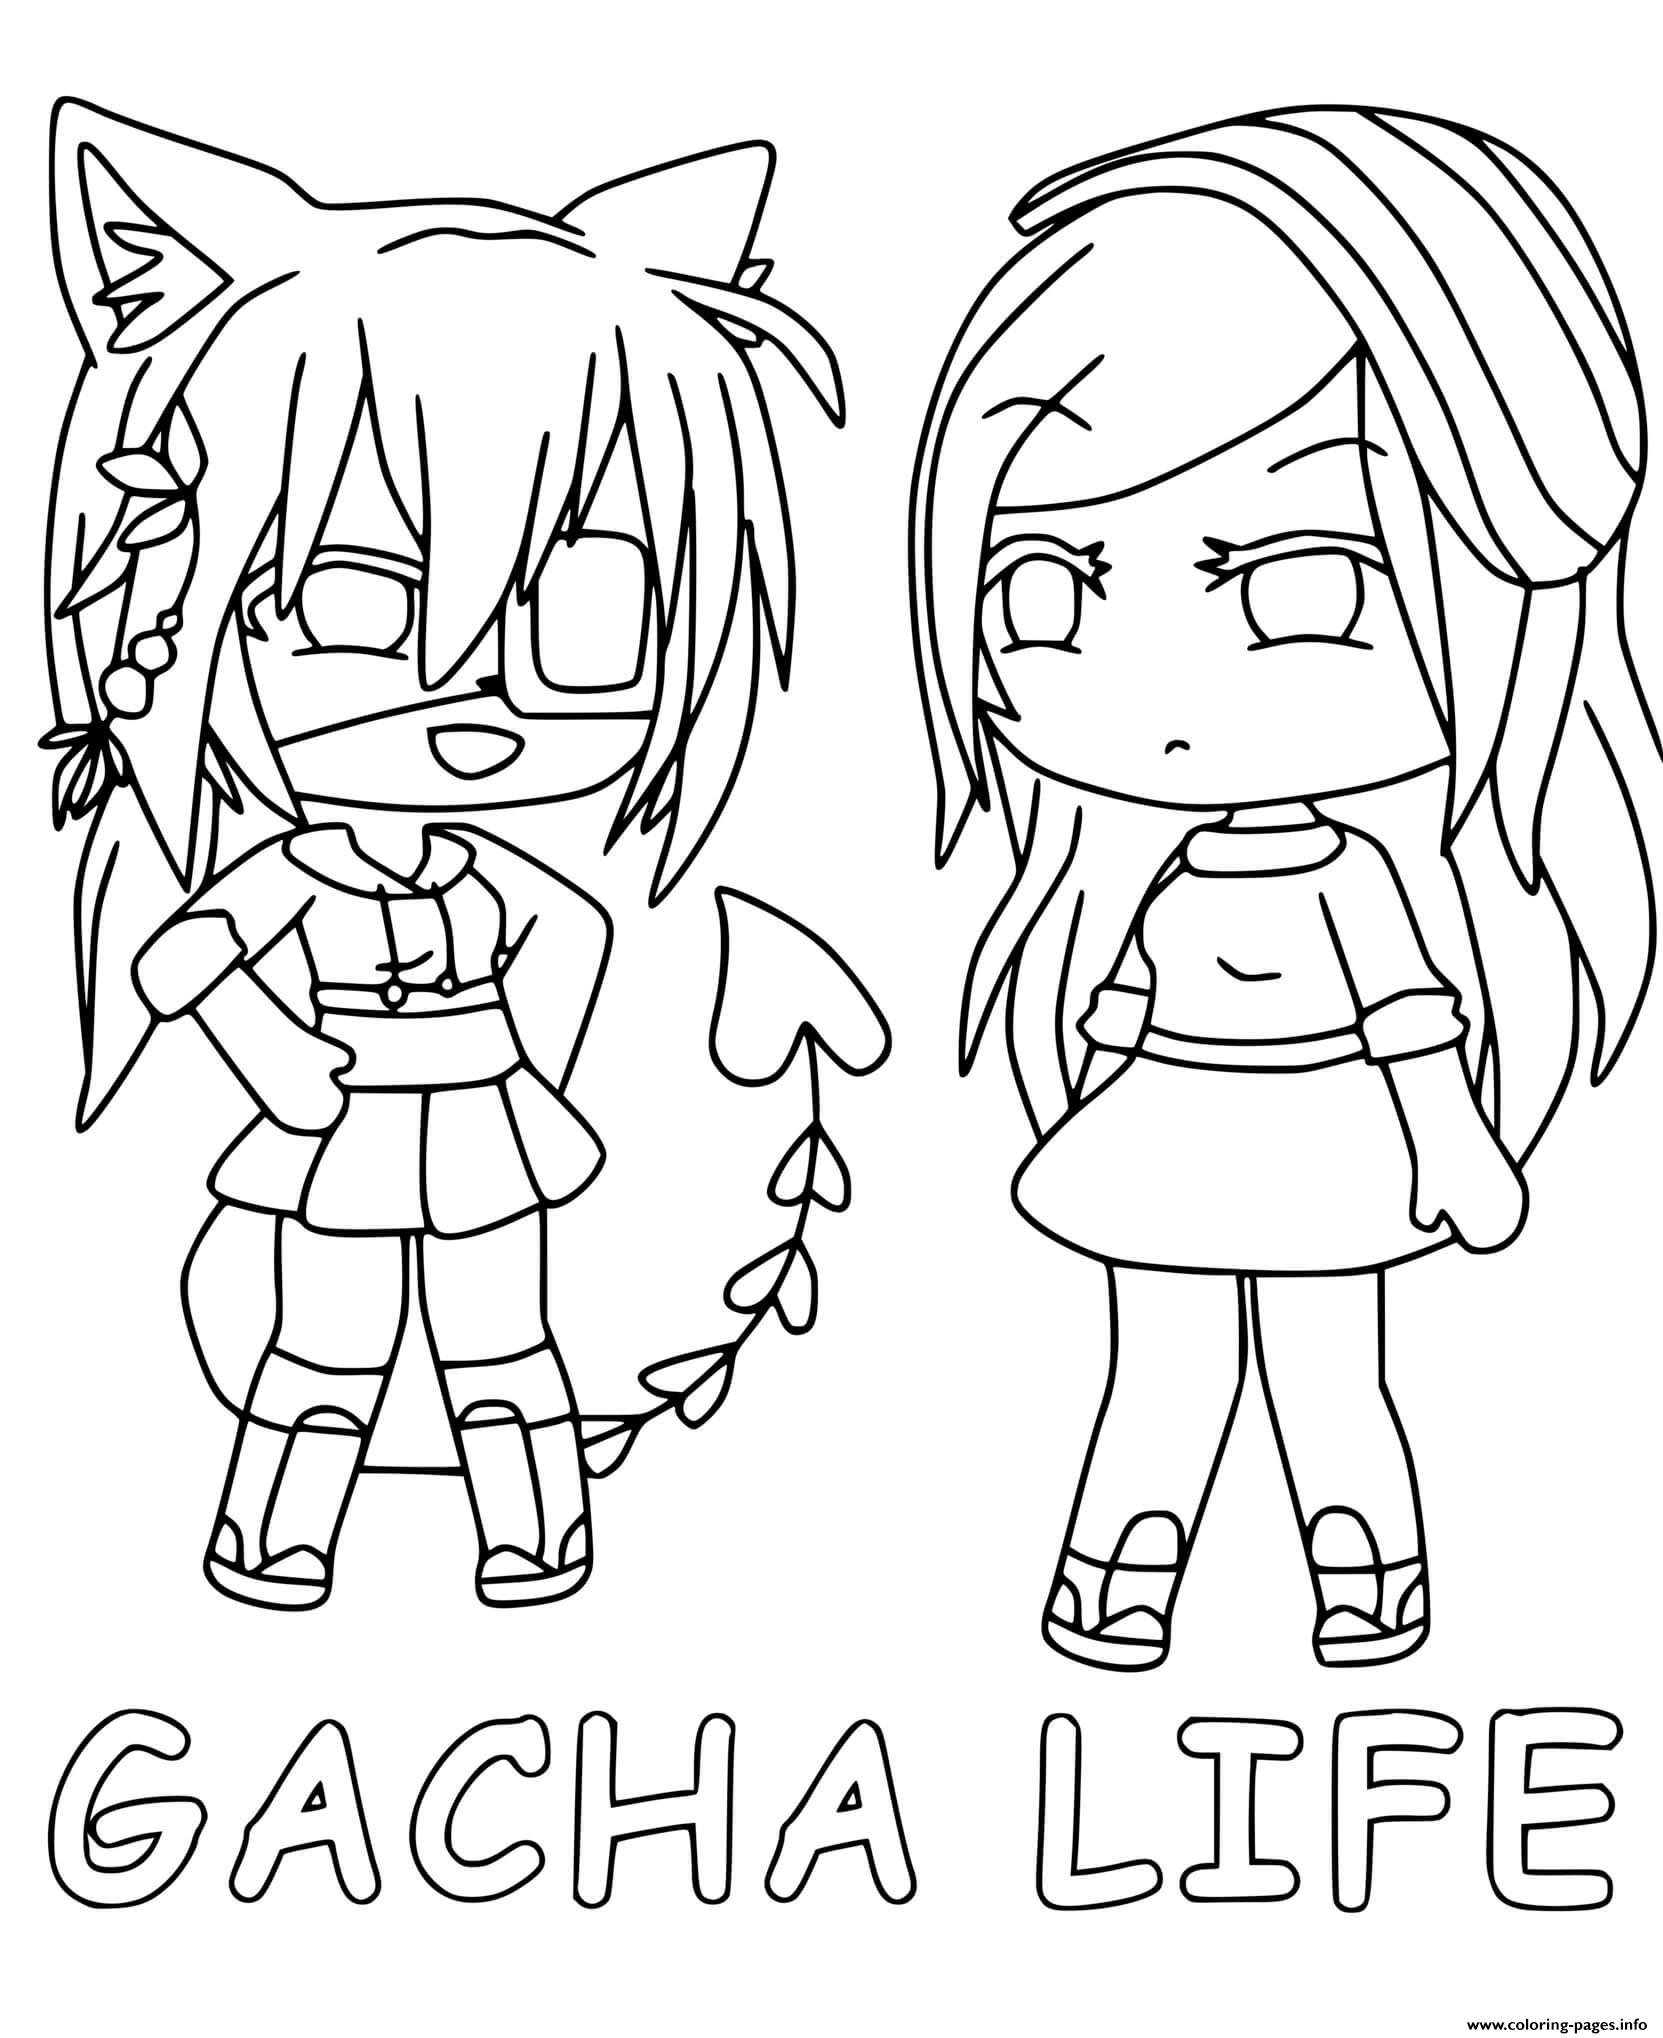 Gacha Life And His Friend Coloring page Printable